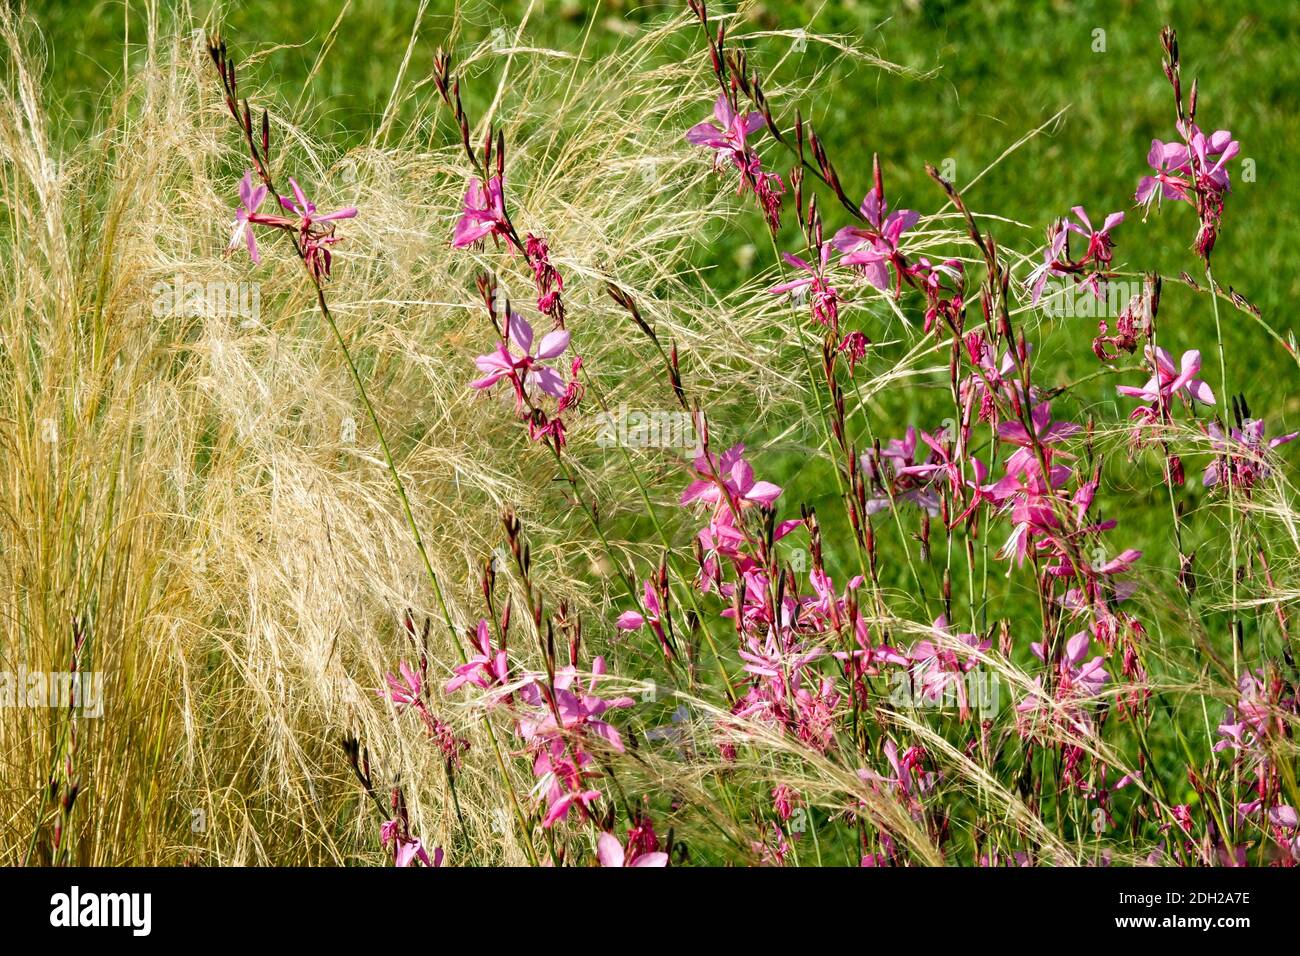 Gaura lindheimeri ornamental grass Stipa Stock Photo